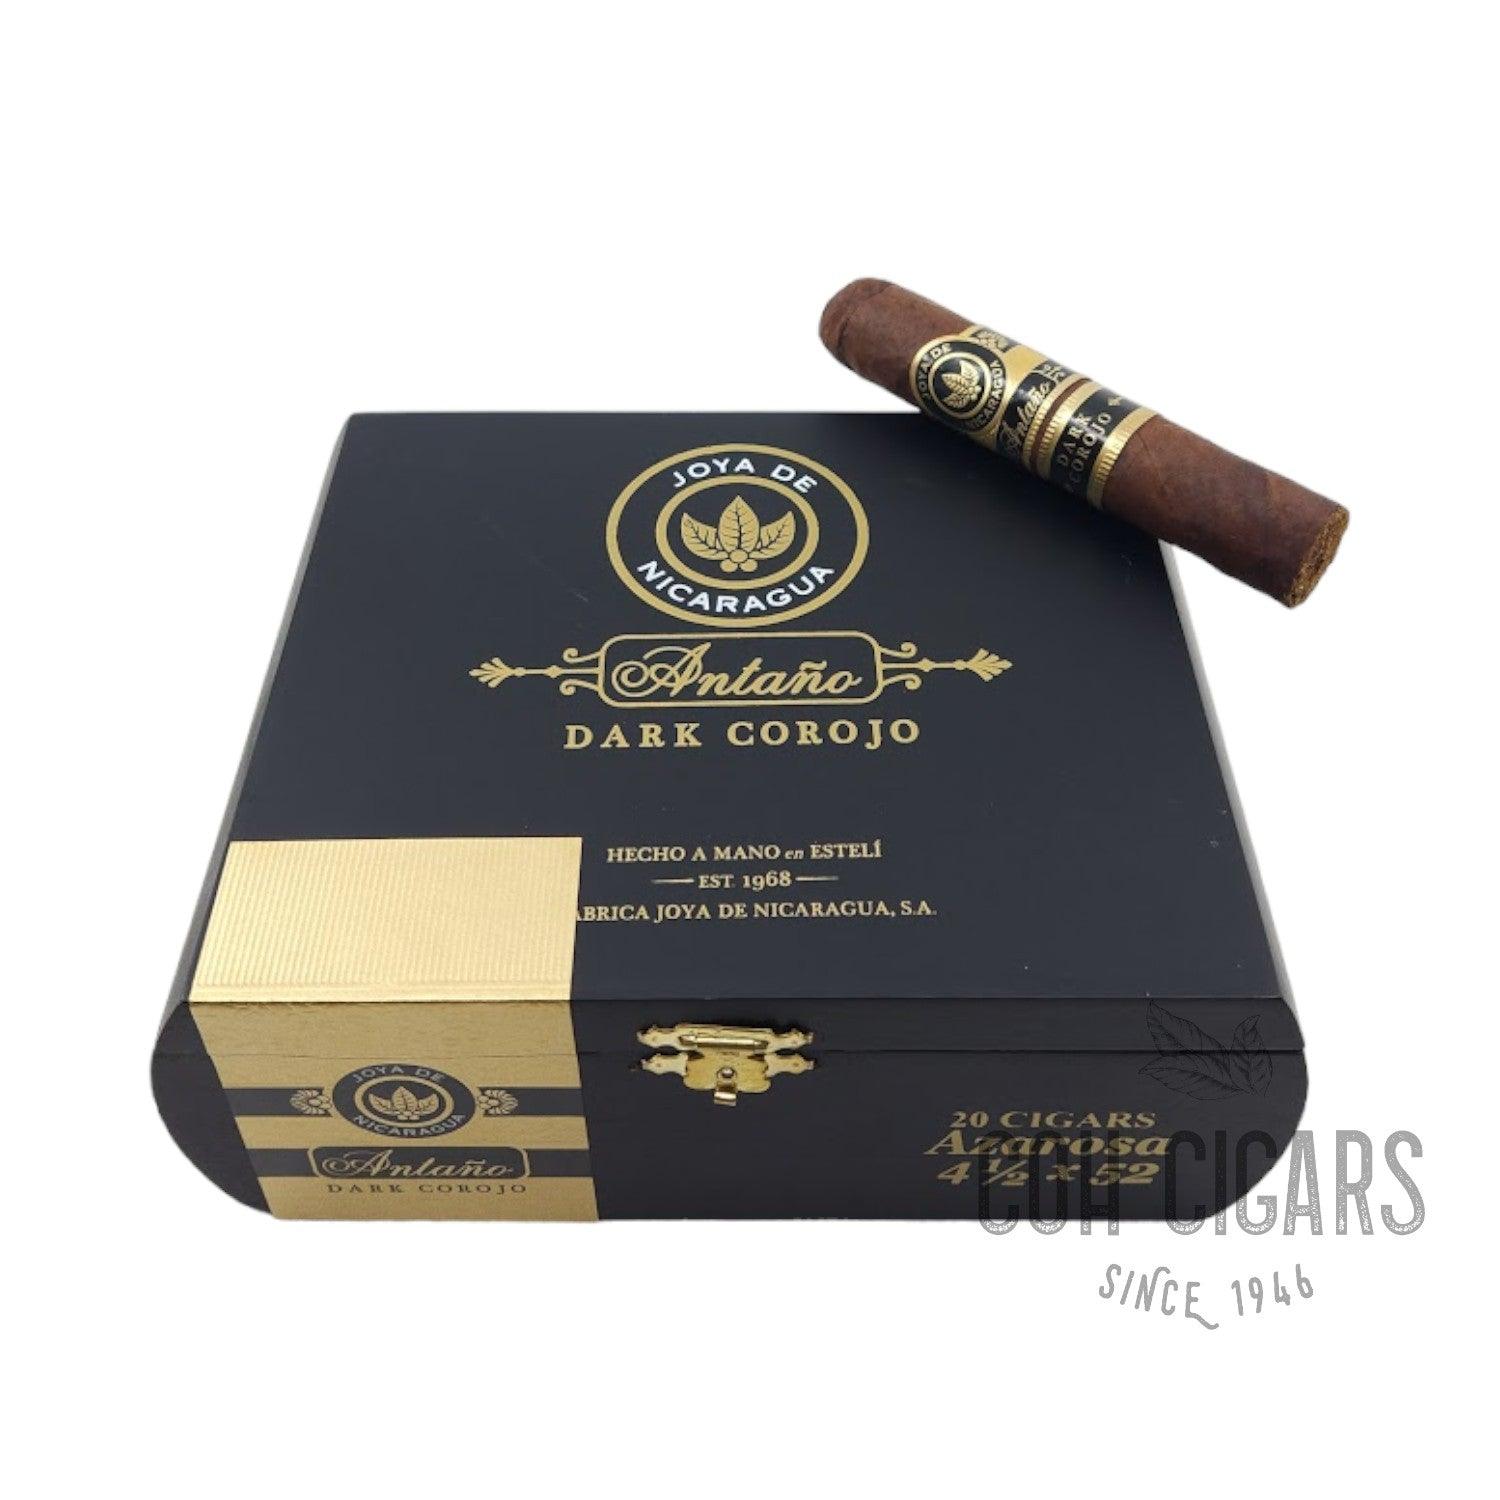 Joya De Nicaragua Cigar | Antano Dark Corojo Azarosa | Box 20 - hk.cohcigars